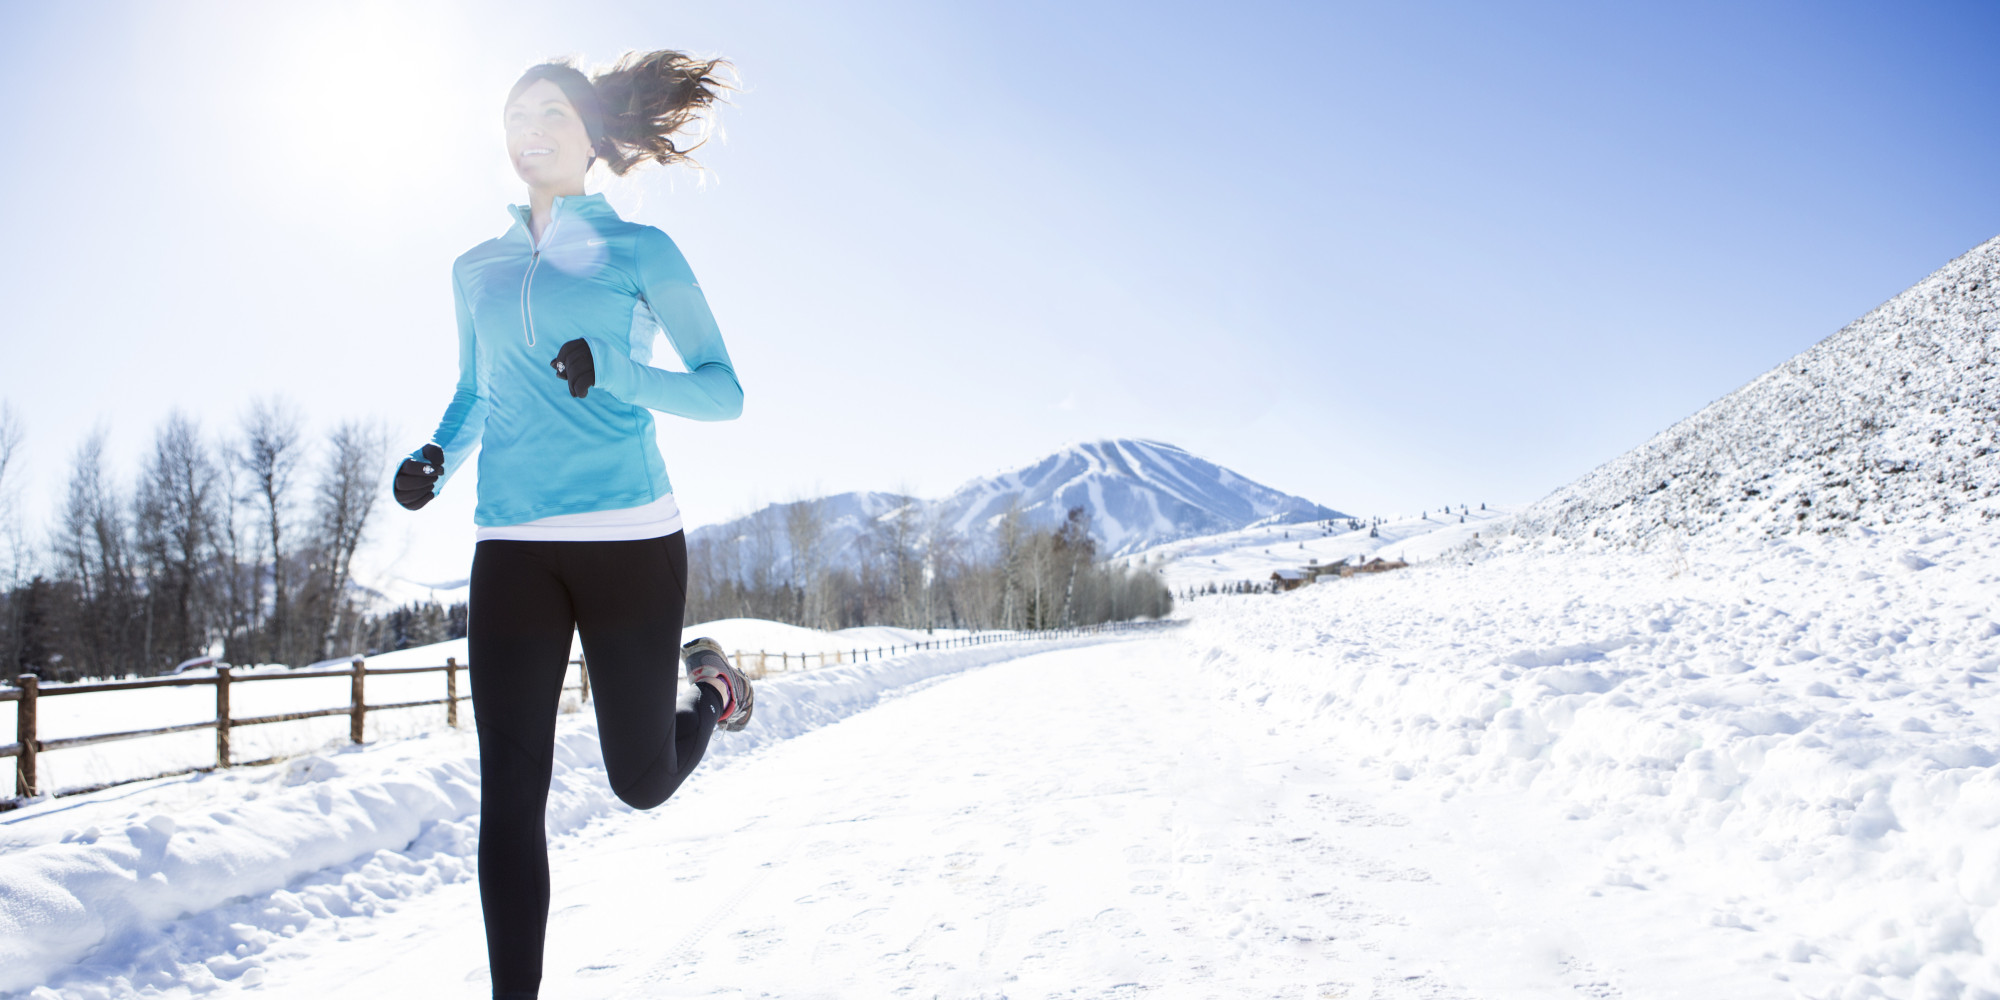 Зимние занятия спортом. Бег зима. Спорт зимой на свежем воздухе. Спорт на улице зимой. Спорт зимой бег.